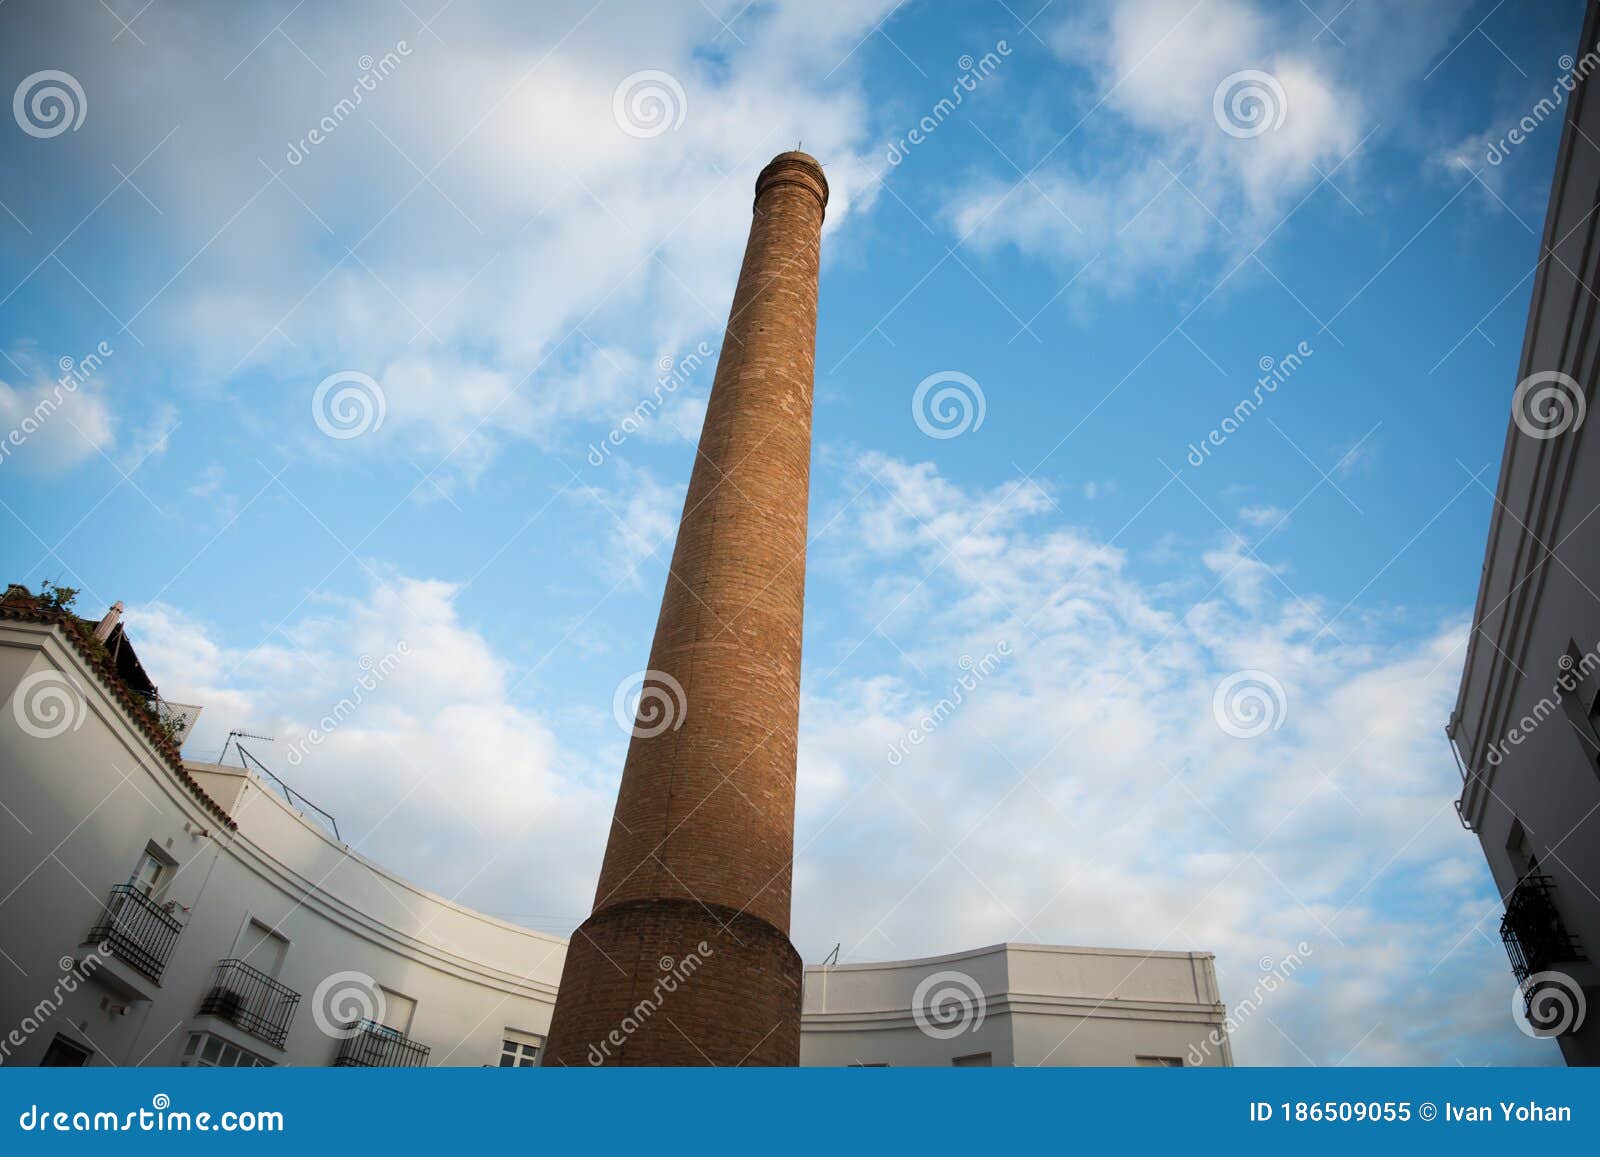 old factory chimney made of orange bricks in jerez de la frontera, south of spain